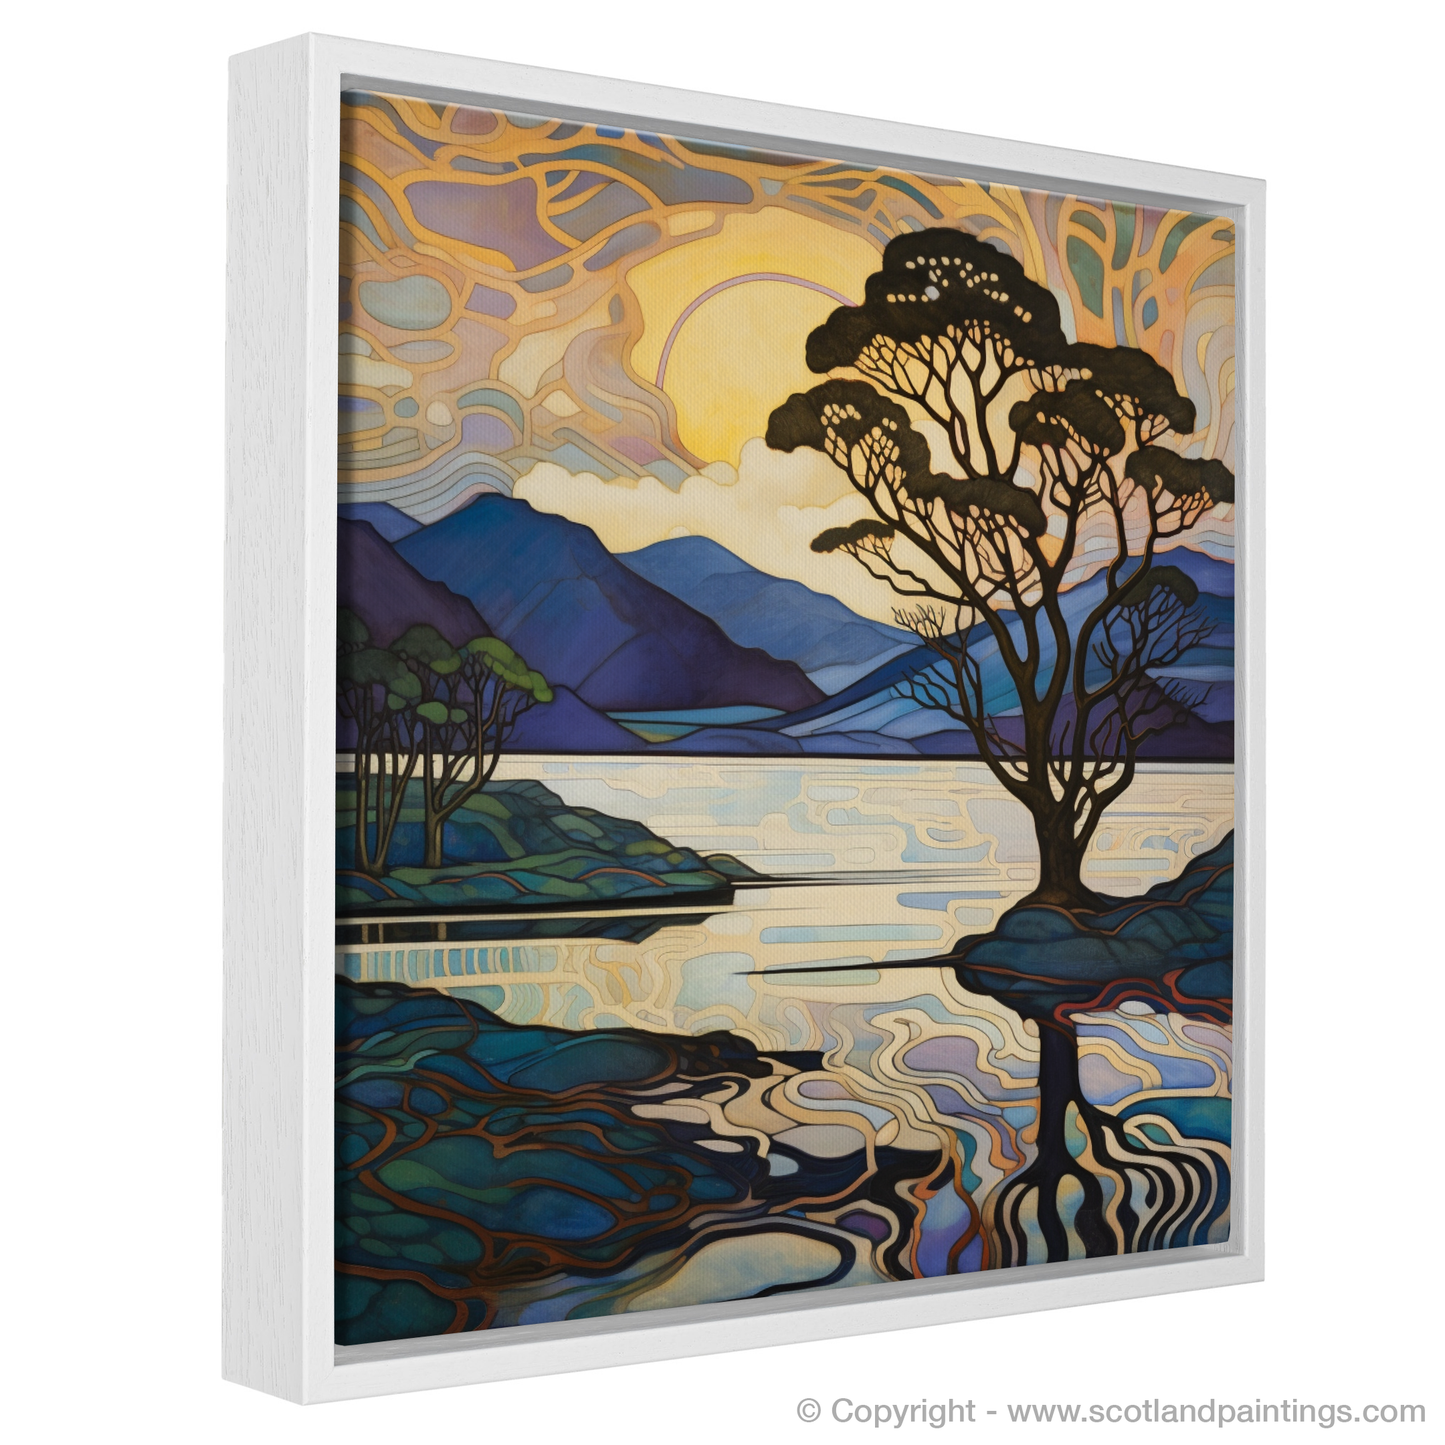 Painting and Art Print of Loch Lomond entitled "Art Nouveau Elegance: A Loch Lomond Masterpiece".